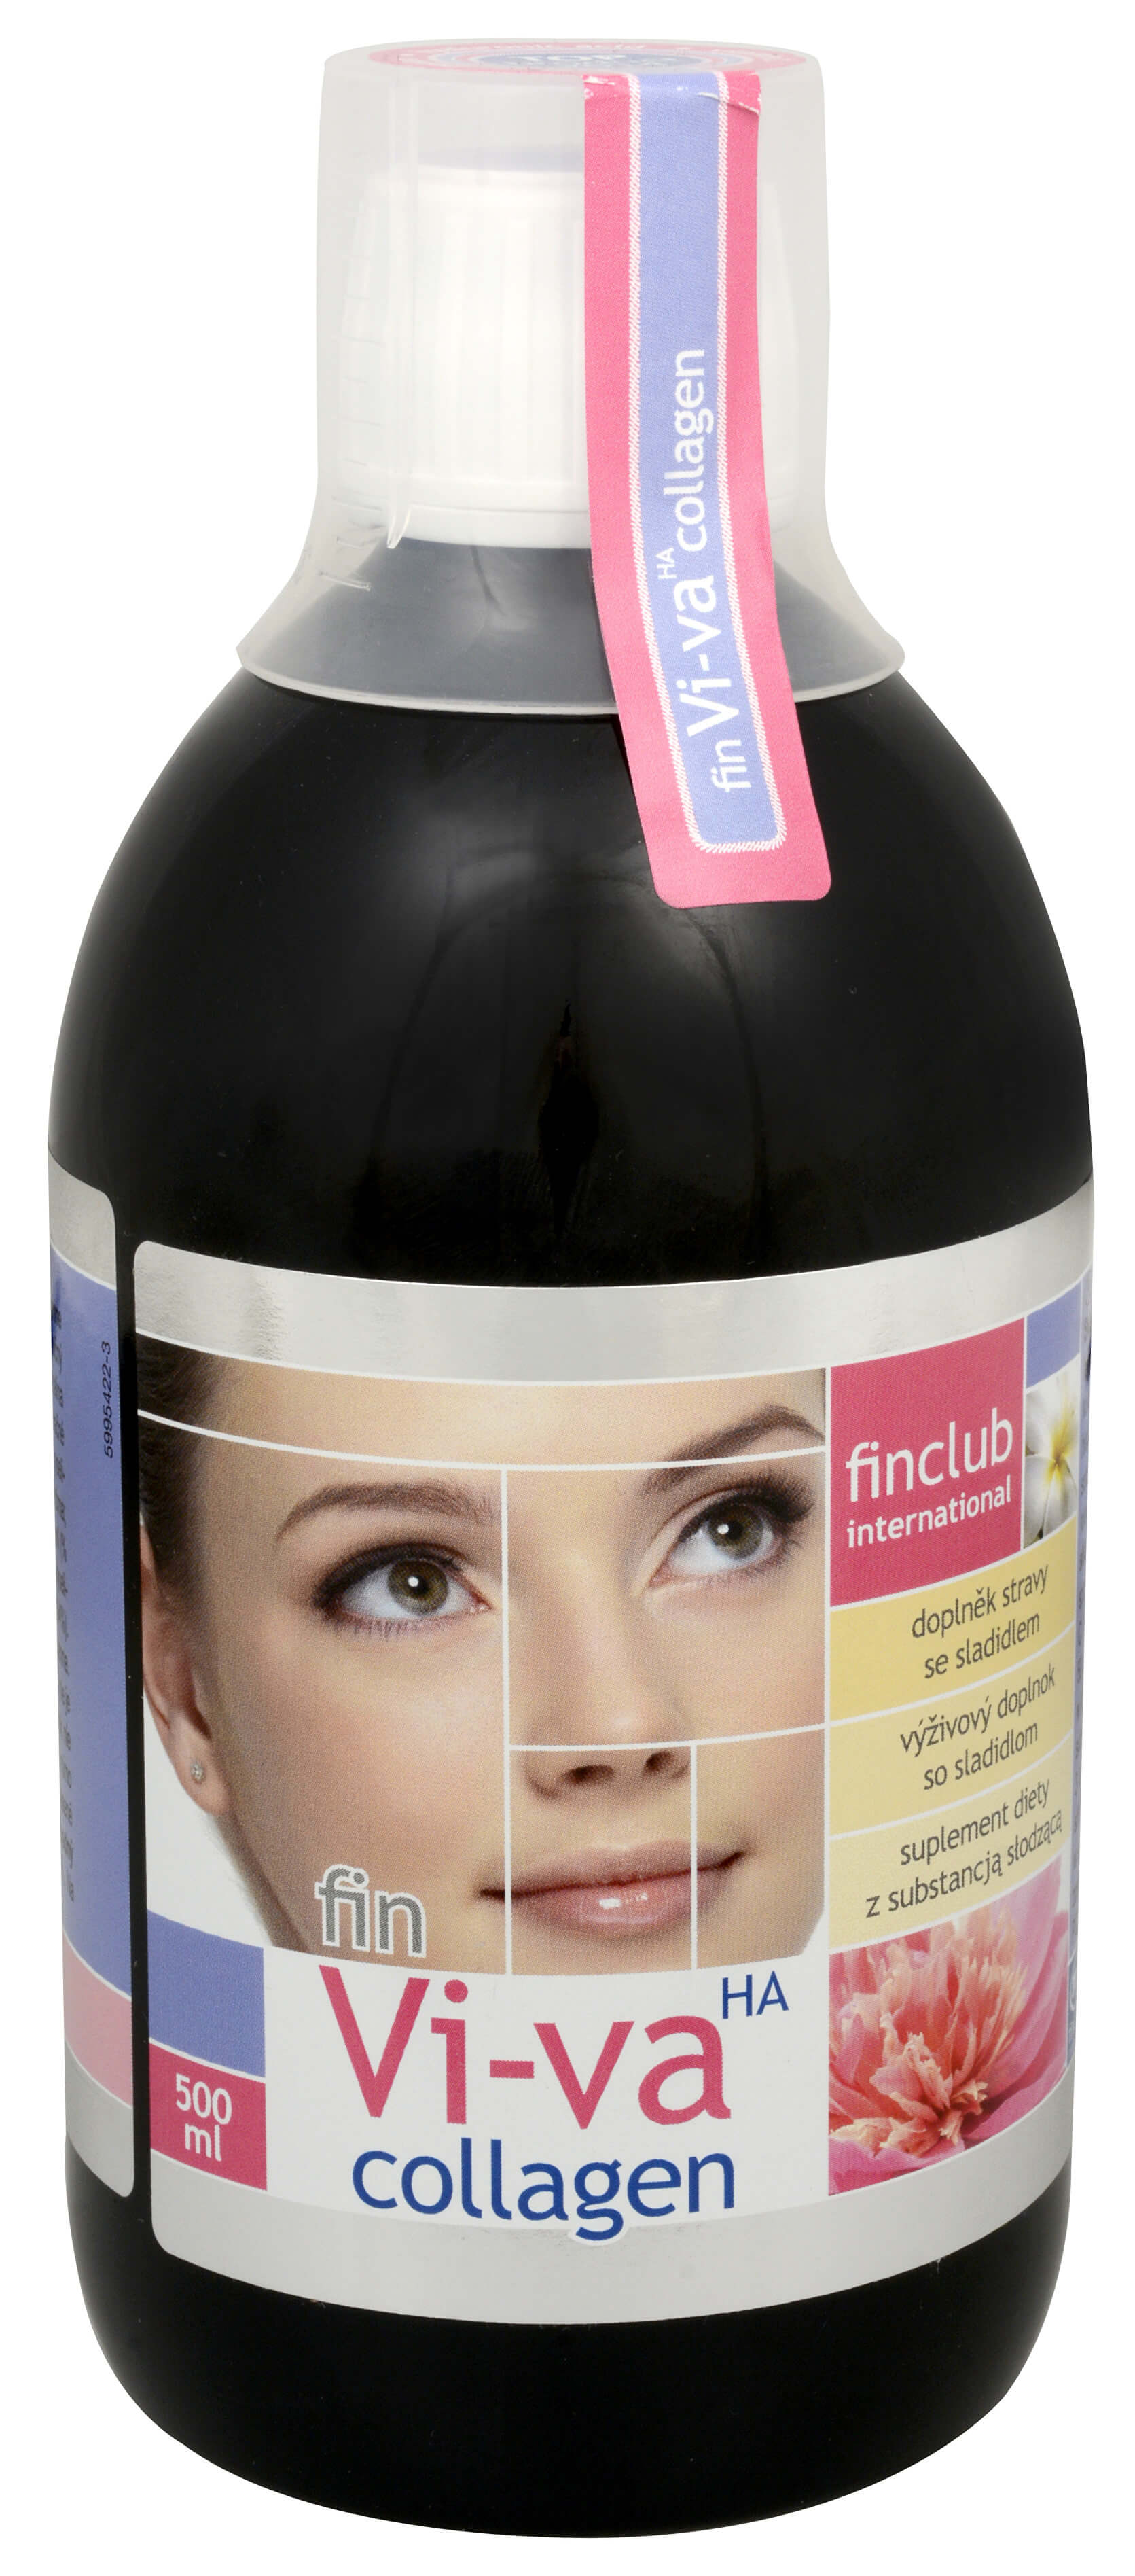 Zobrazit detail výrobku Finclub Fin Vi-va HA collagen 500 ml